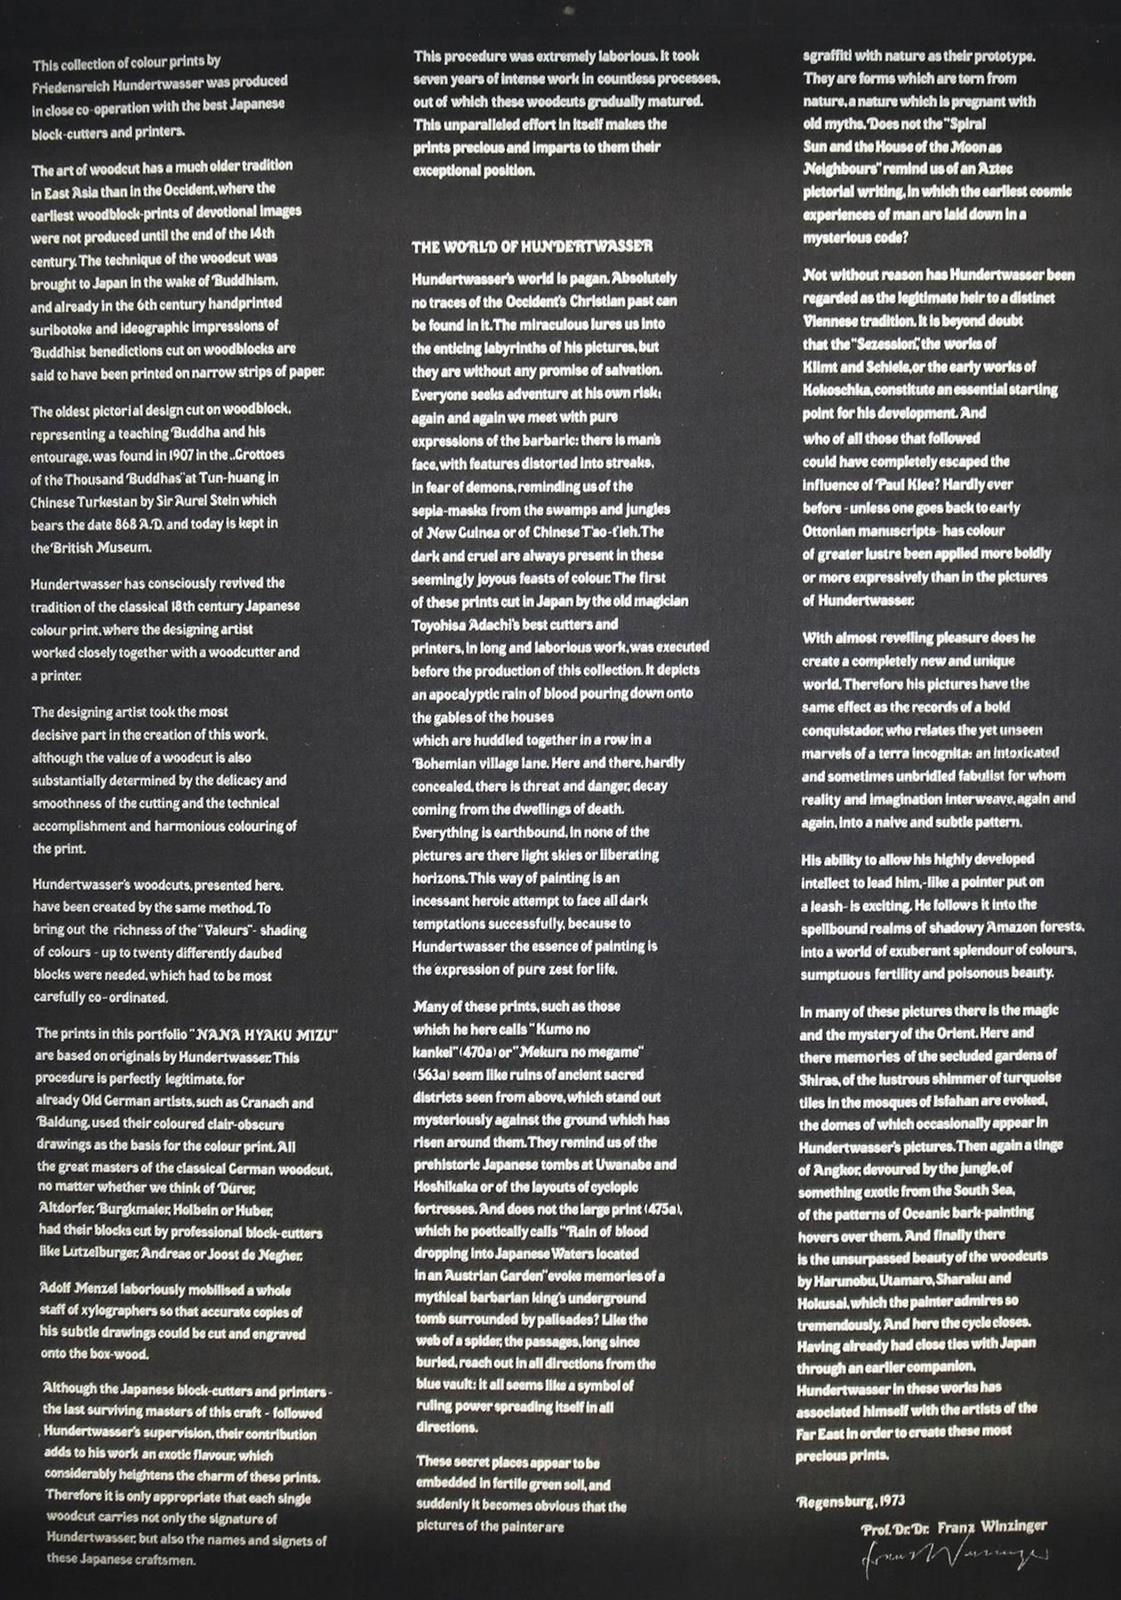 Hundertwasser,F. - Image 11 of 11